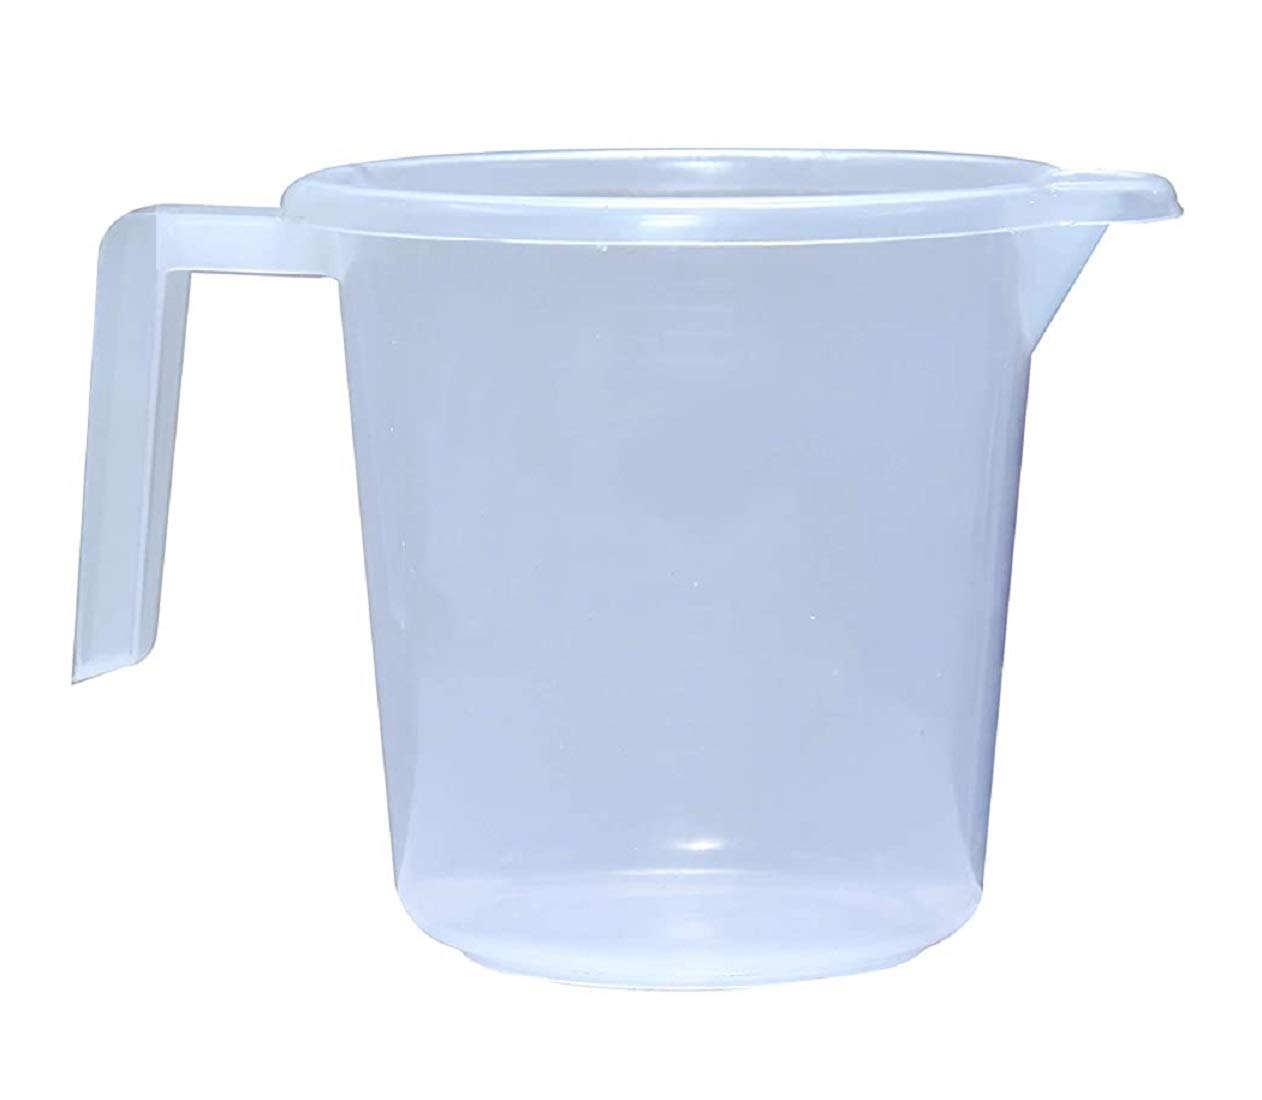 Kuber Industries Virgin Plastic 2 Pieces Transparent Bathroom Mug with Measurement,1800,1100 ML (White)- CTKTC044948